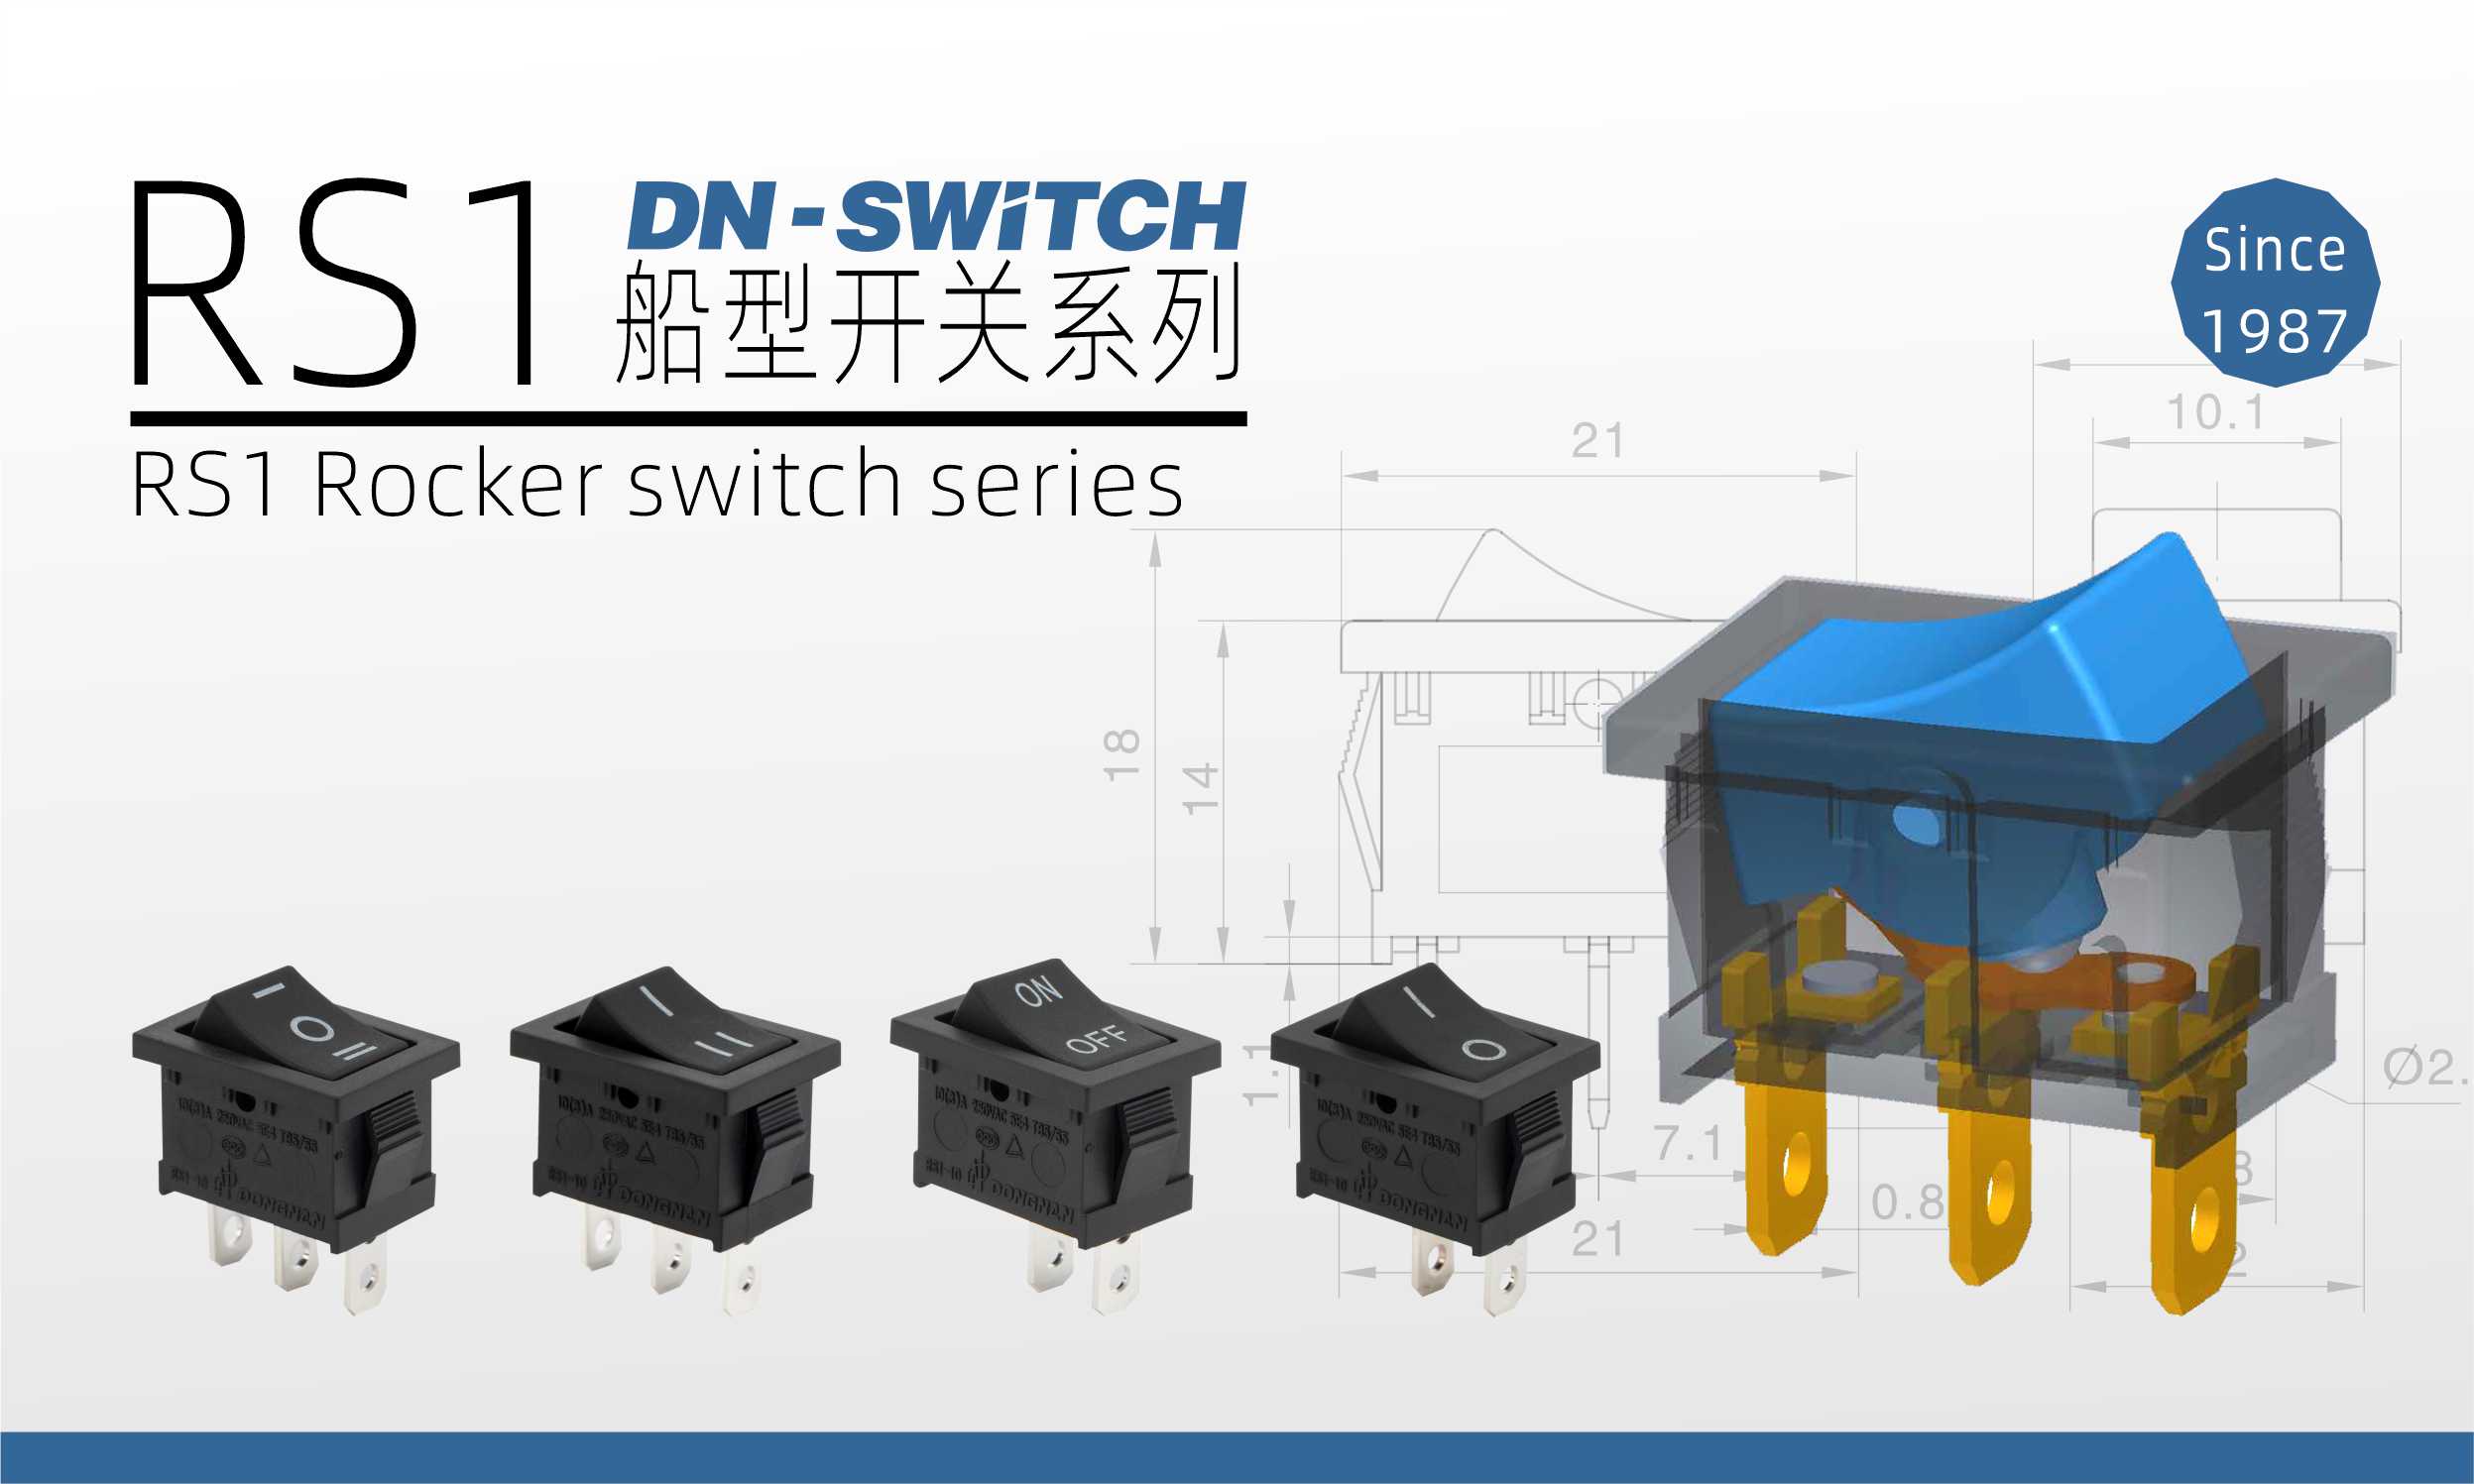 Interruptor DONGNAN - Interruptor oscilante RS1 simples e confiável